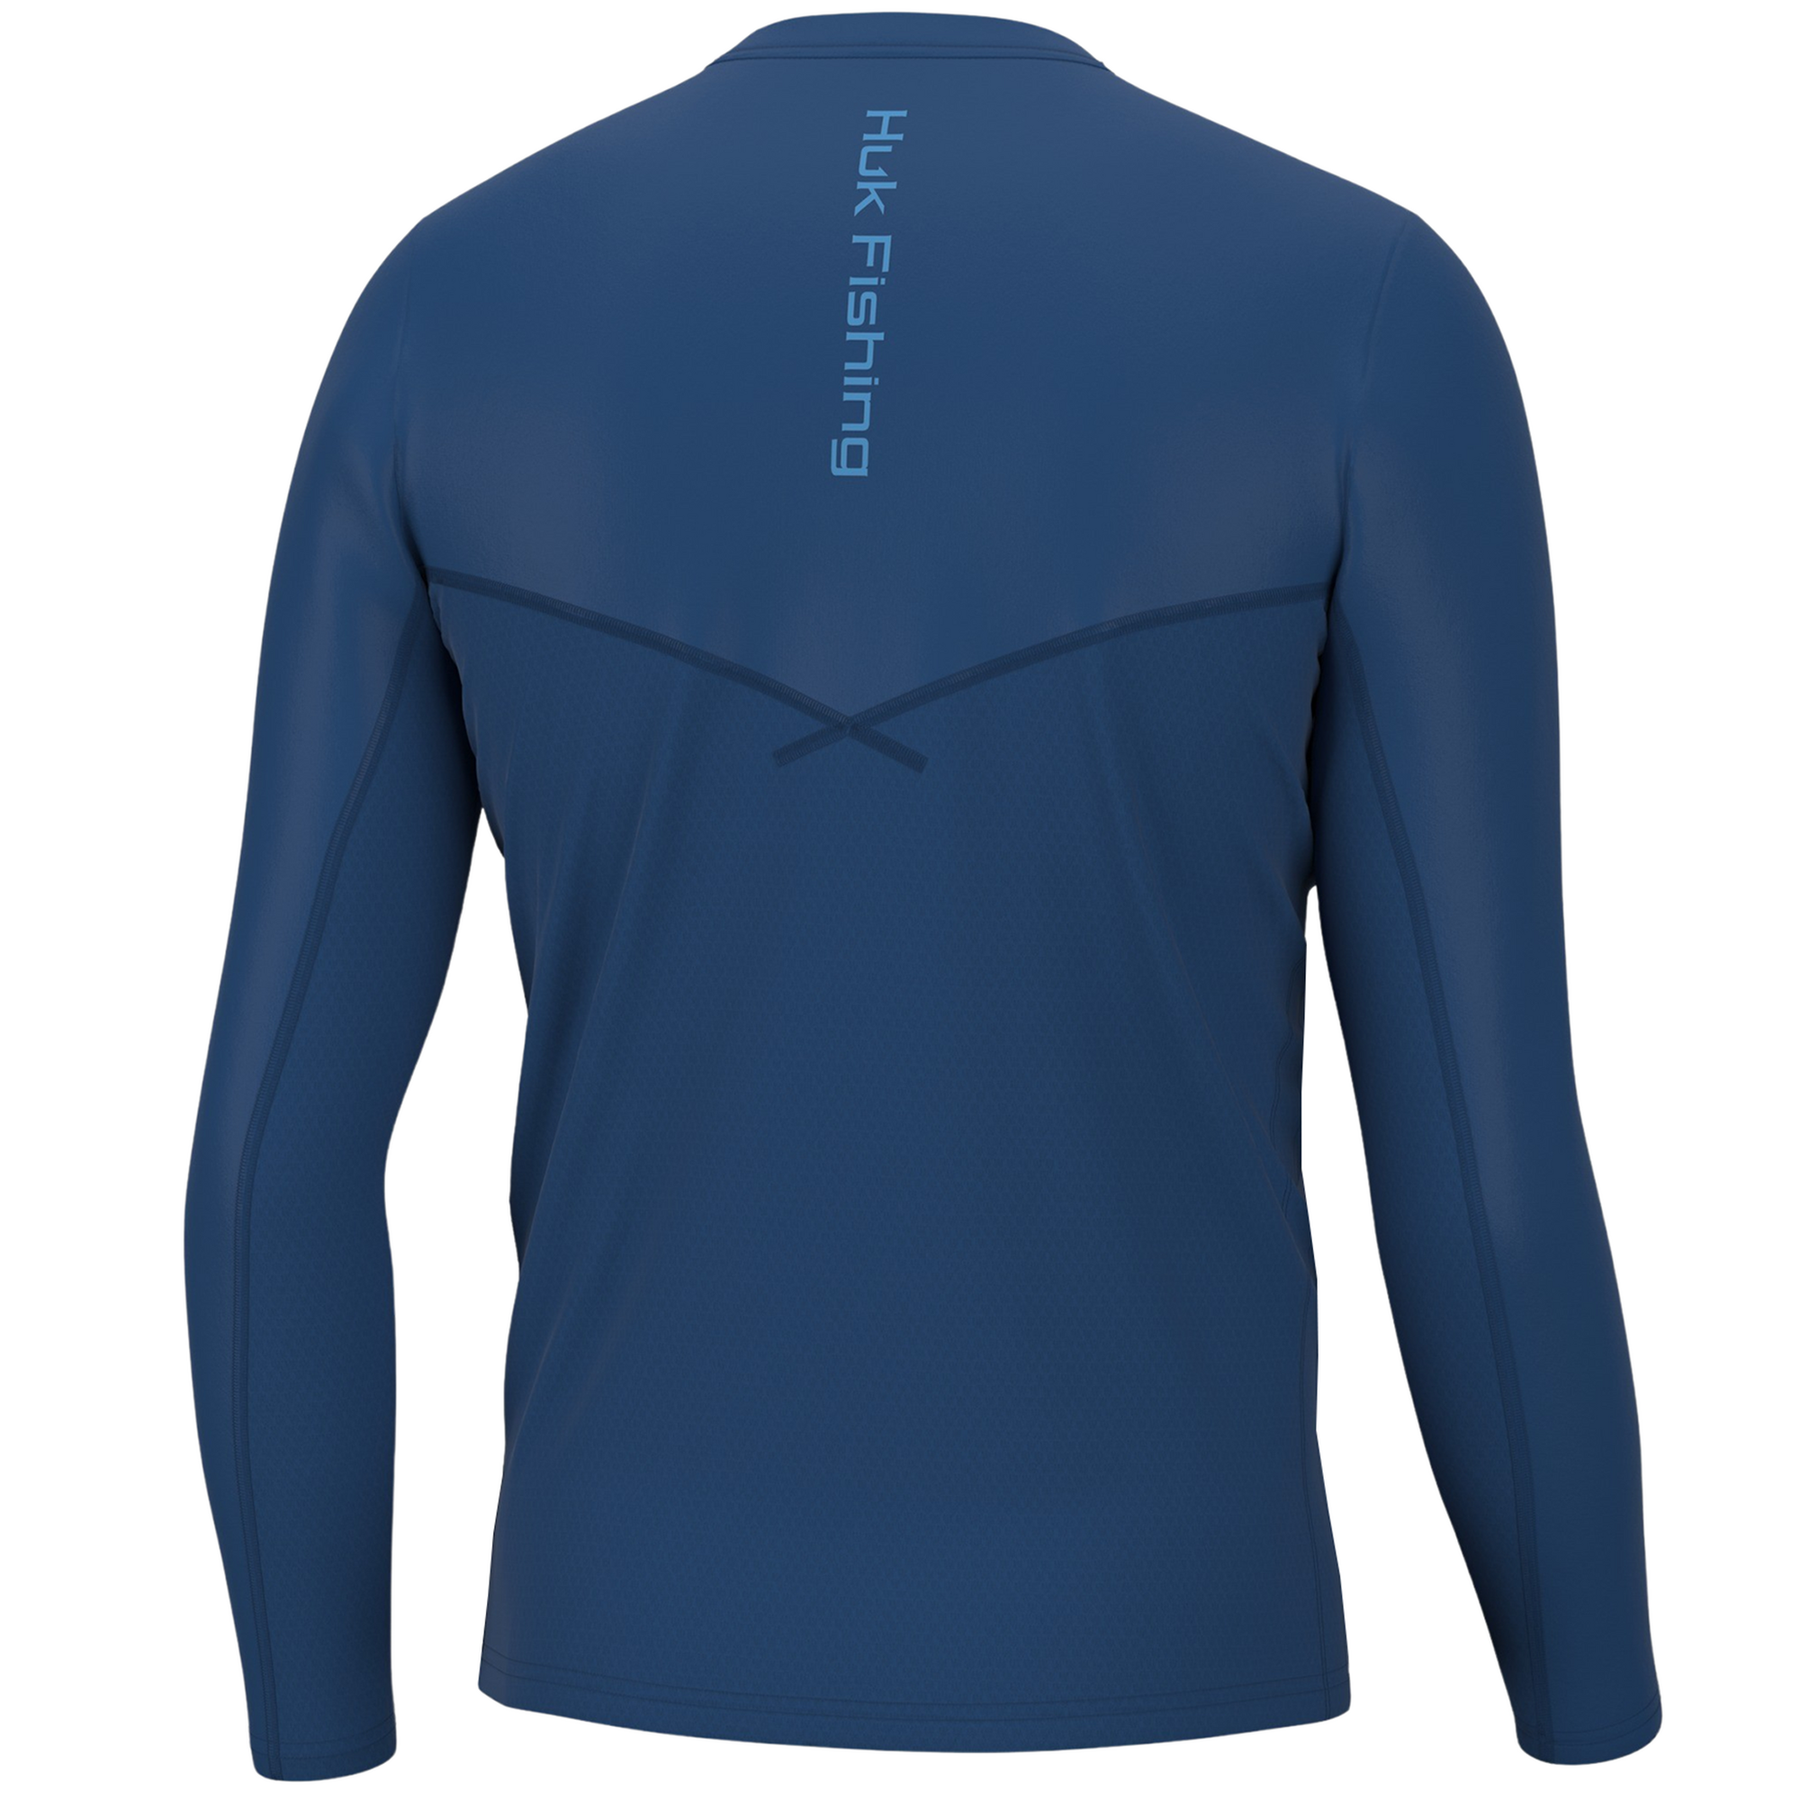  HUK Men's Icon X Pocket Long-Sleeve Performance Shirt